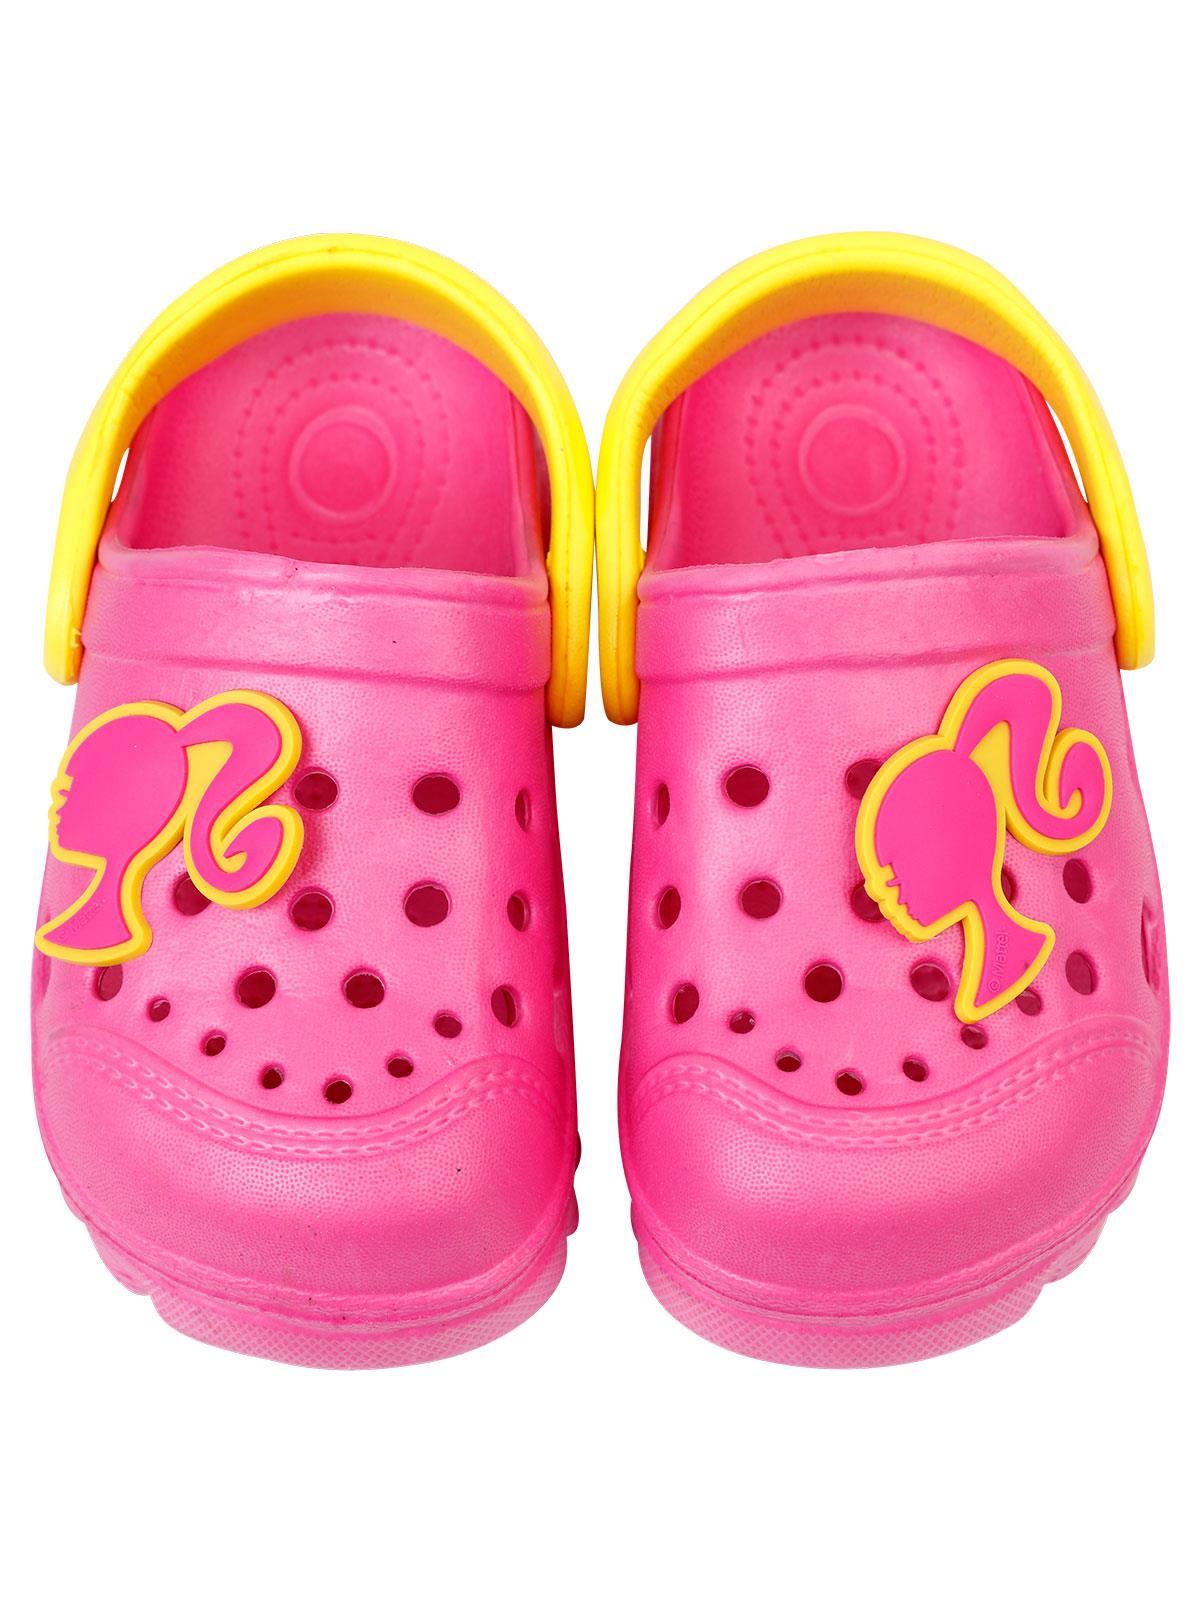 Barbie Kiz Cocuk Crocs Terlik 30 Numara Pembe Fiyati 68 Pmb